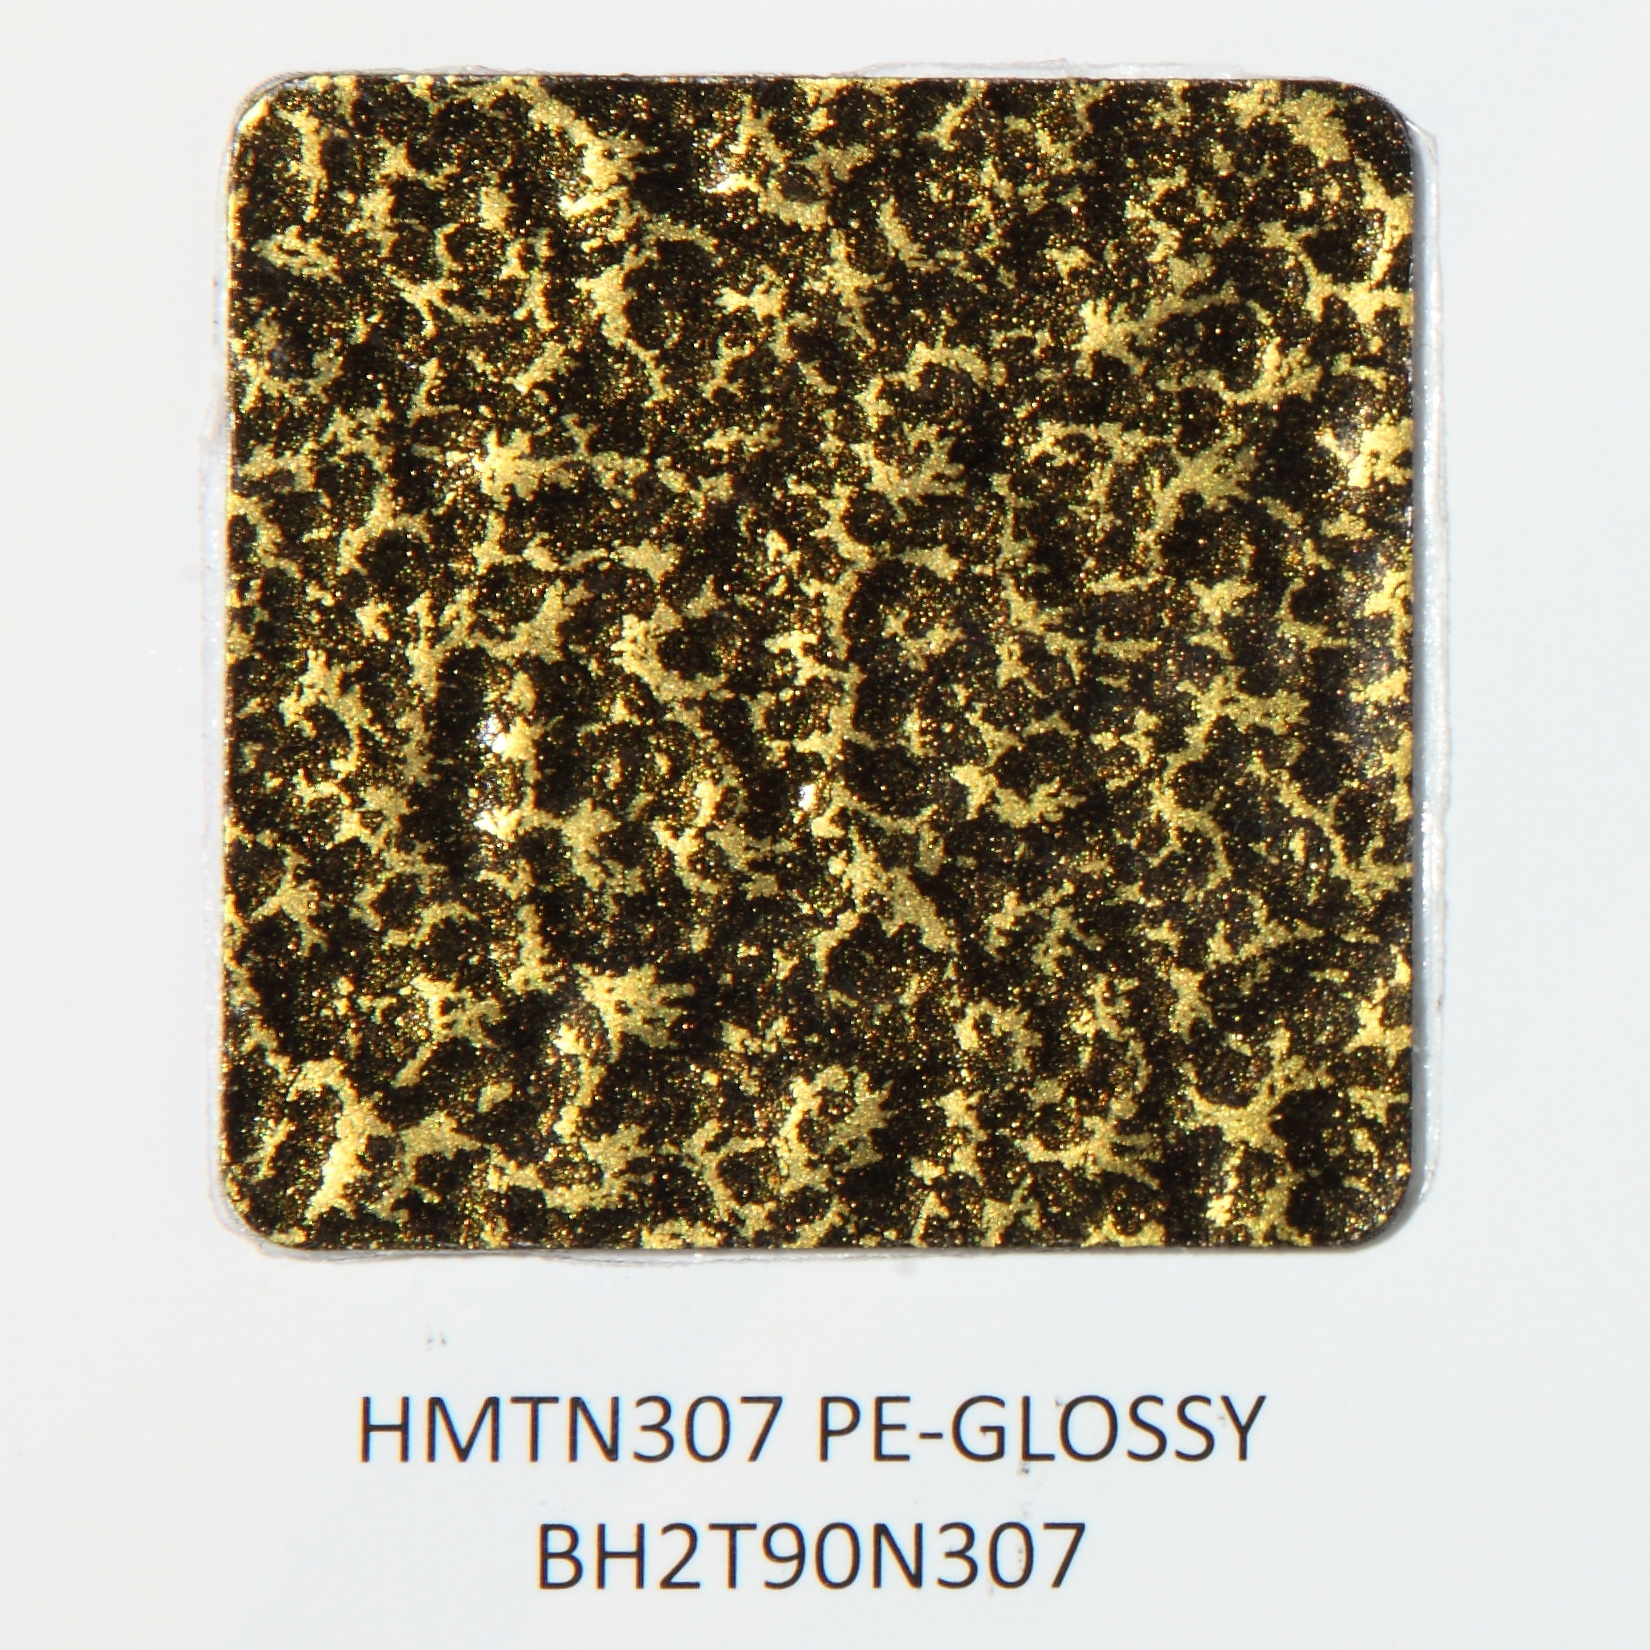 HMTN307 PE GLOSSY BH2T90N307